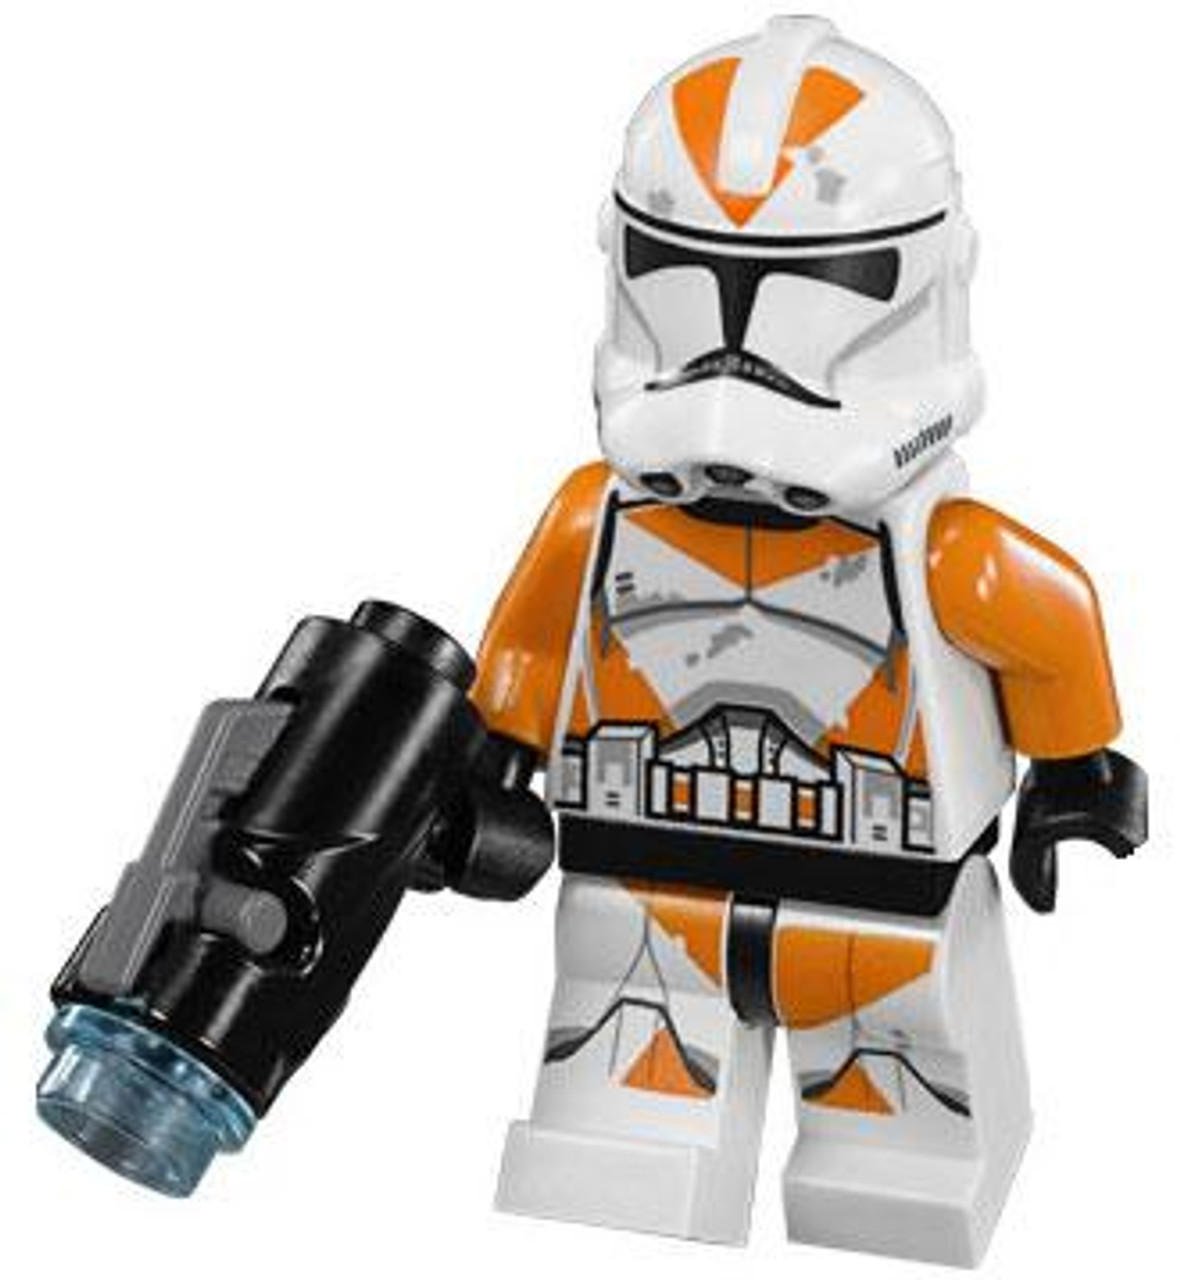 lego star wars troopers